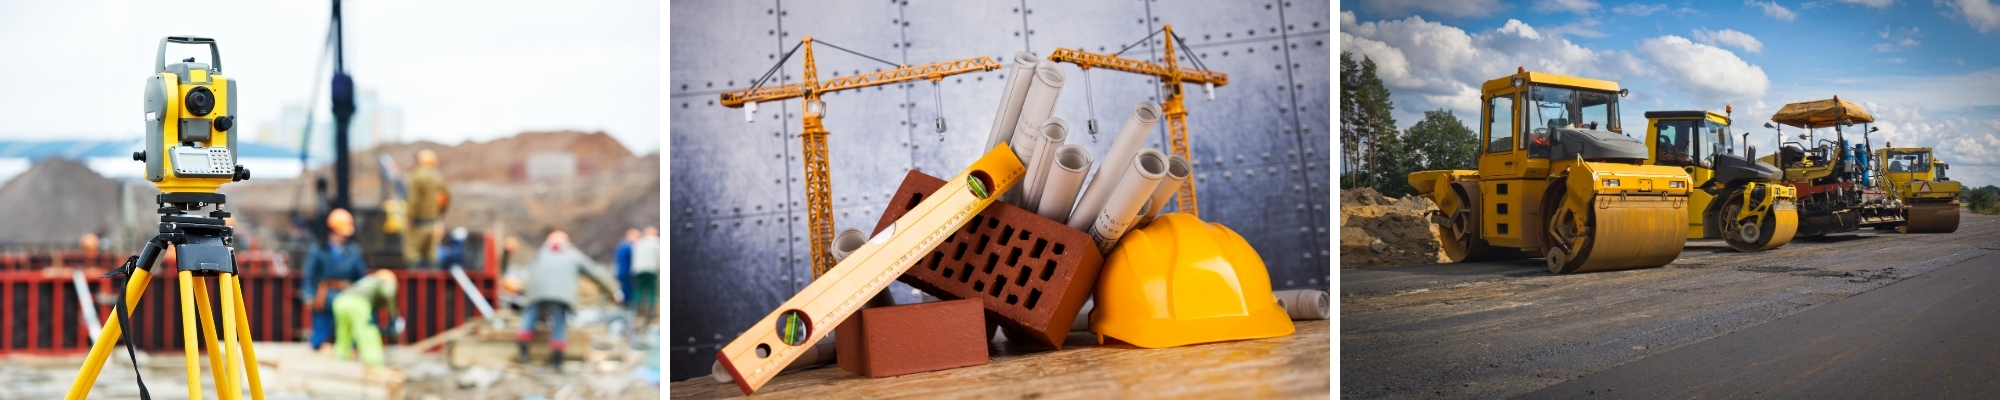 Construction Equipment Rental Financing